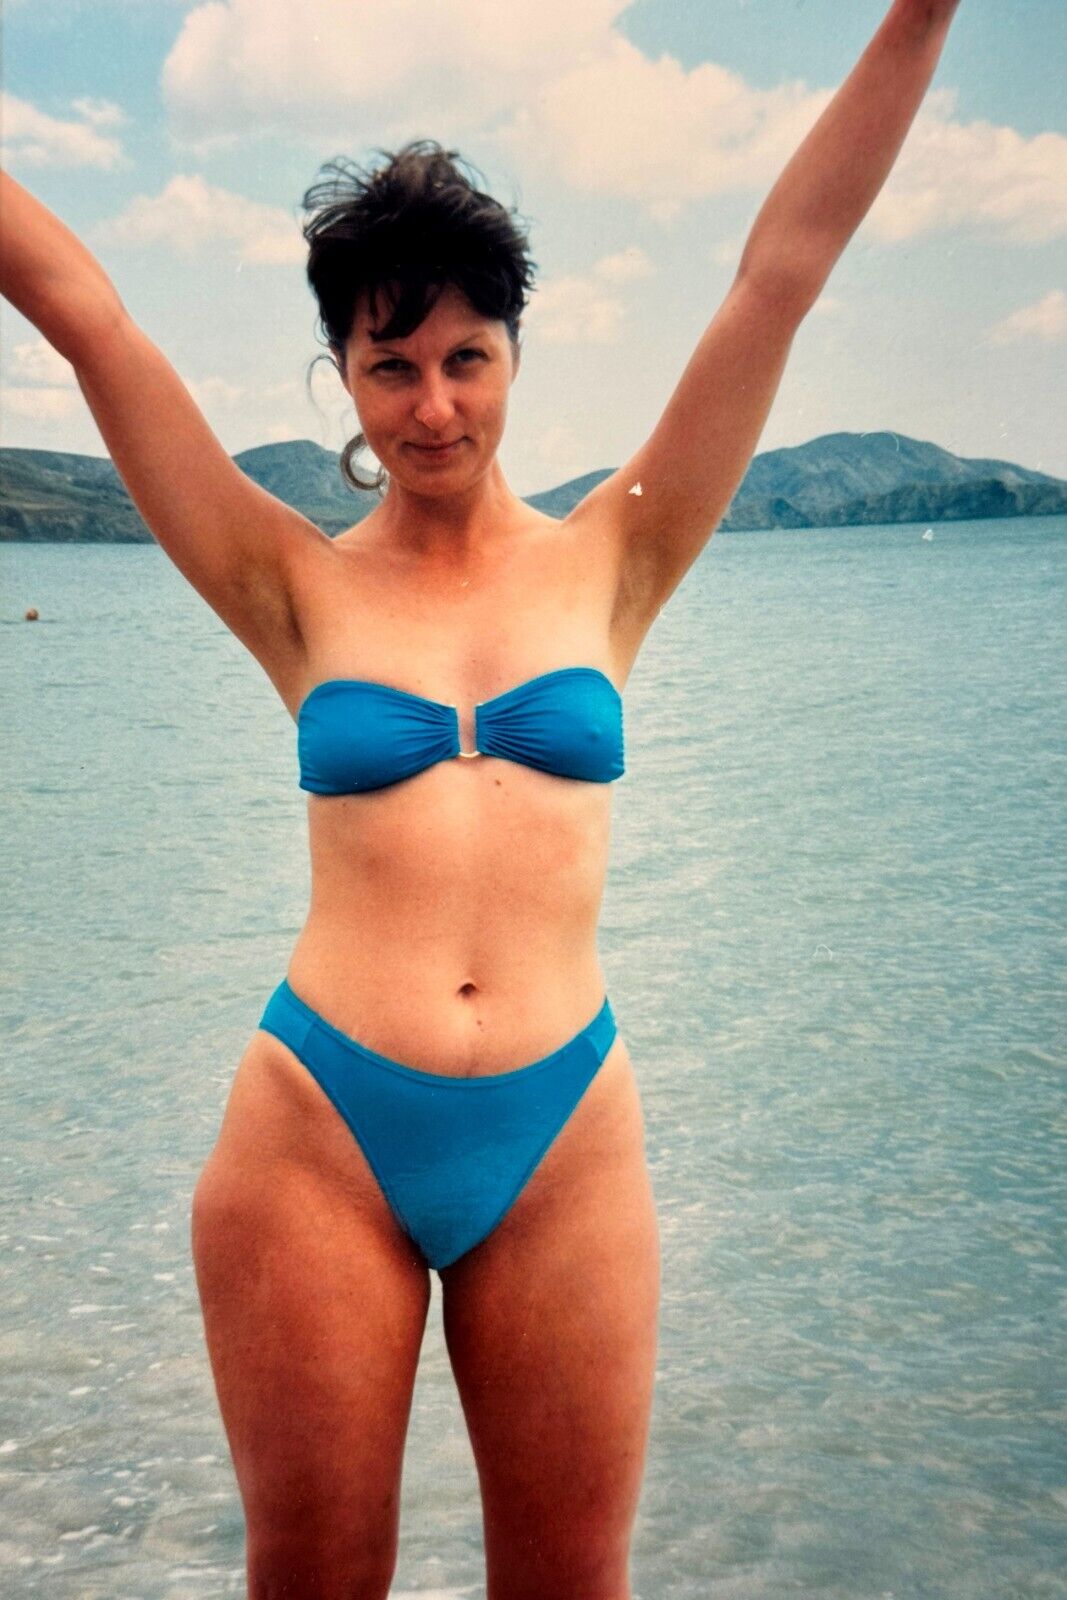 2009 Beach Young Curvy Brunette Woman Armpits Bikini Posing on Sea Vintage Photo